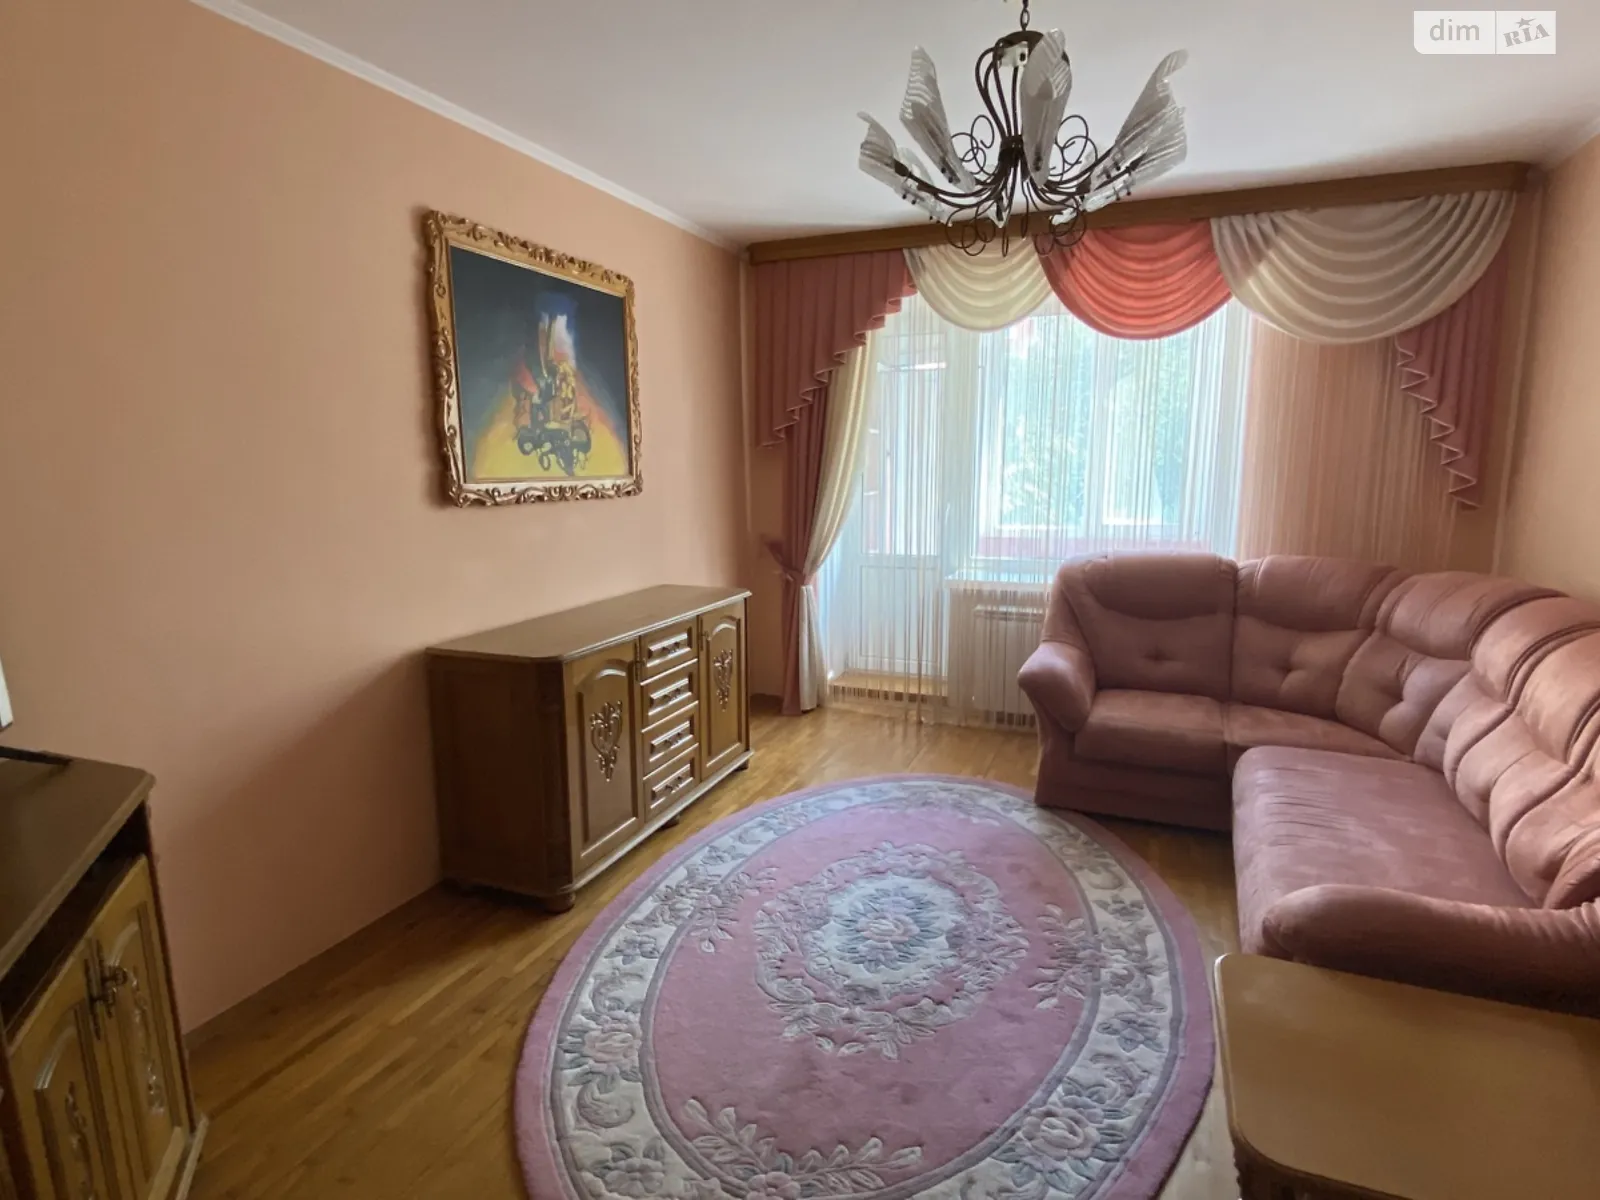 2-кімнатна квартира 54 кв. м у Тернополі, цена: 300 $ - фото 1